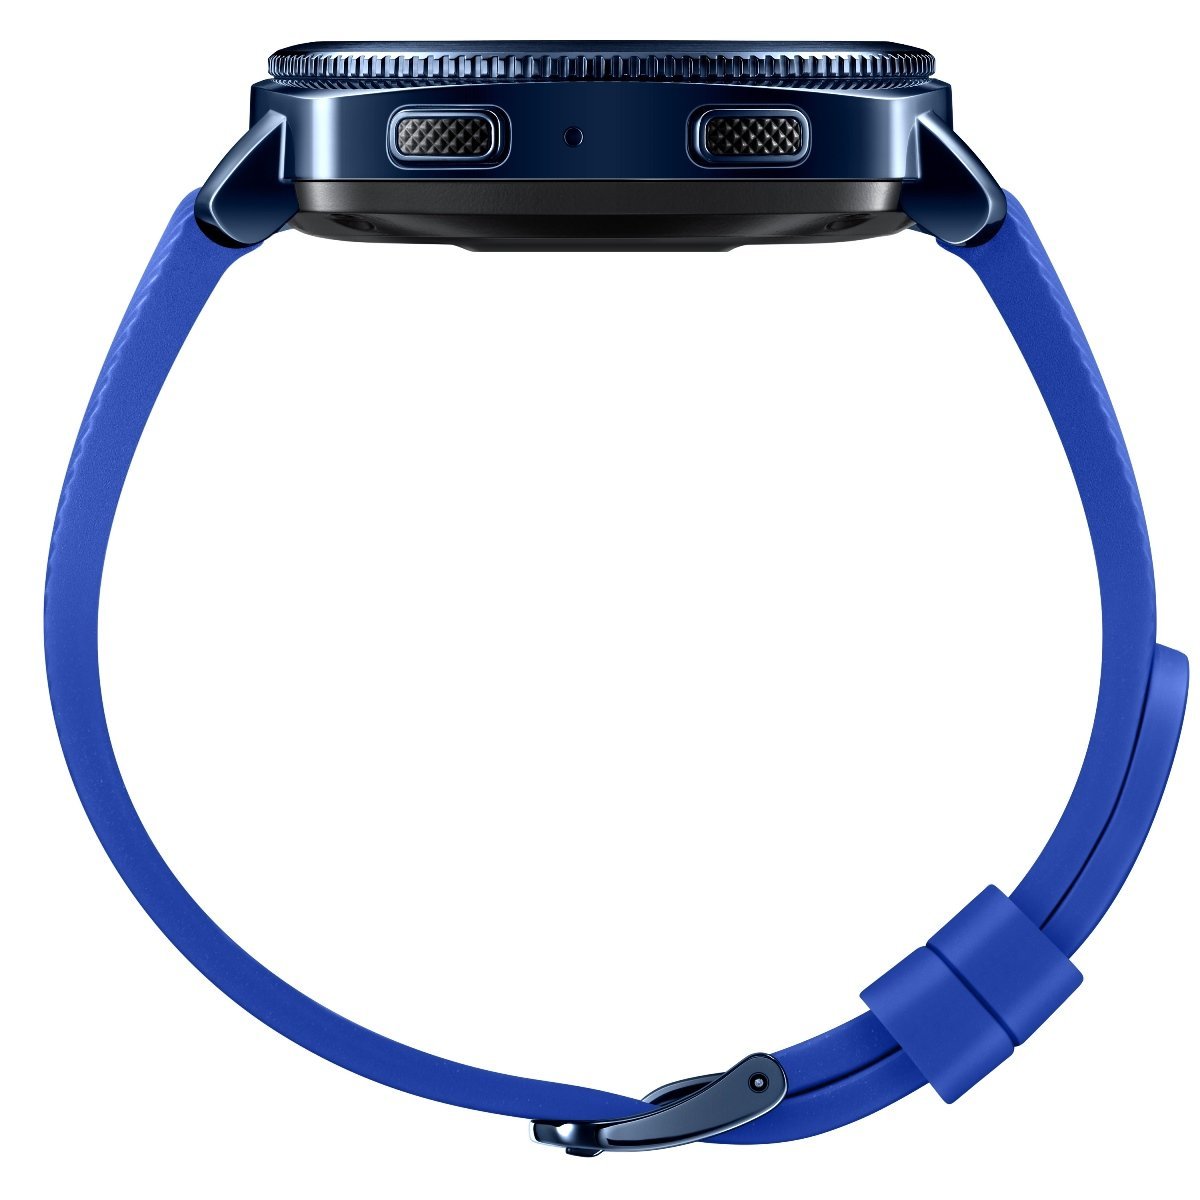 Reloj Samsung Gear Sport Azul Mod. R600Nzbamxo